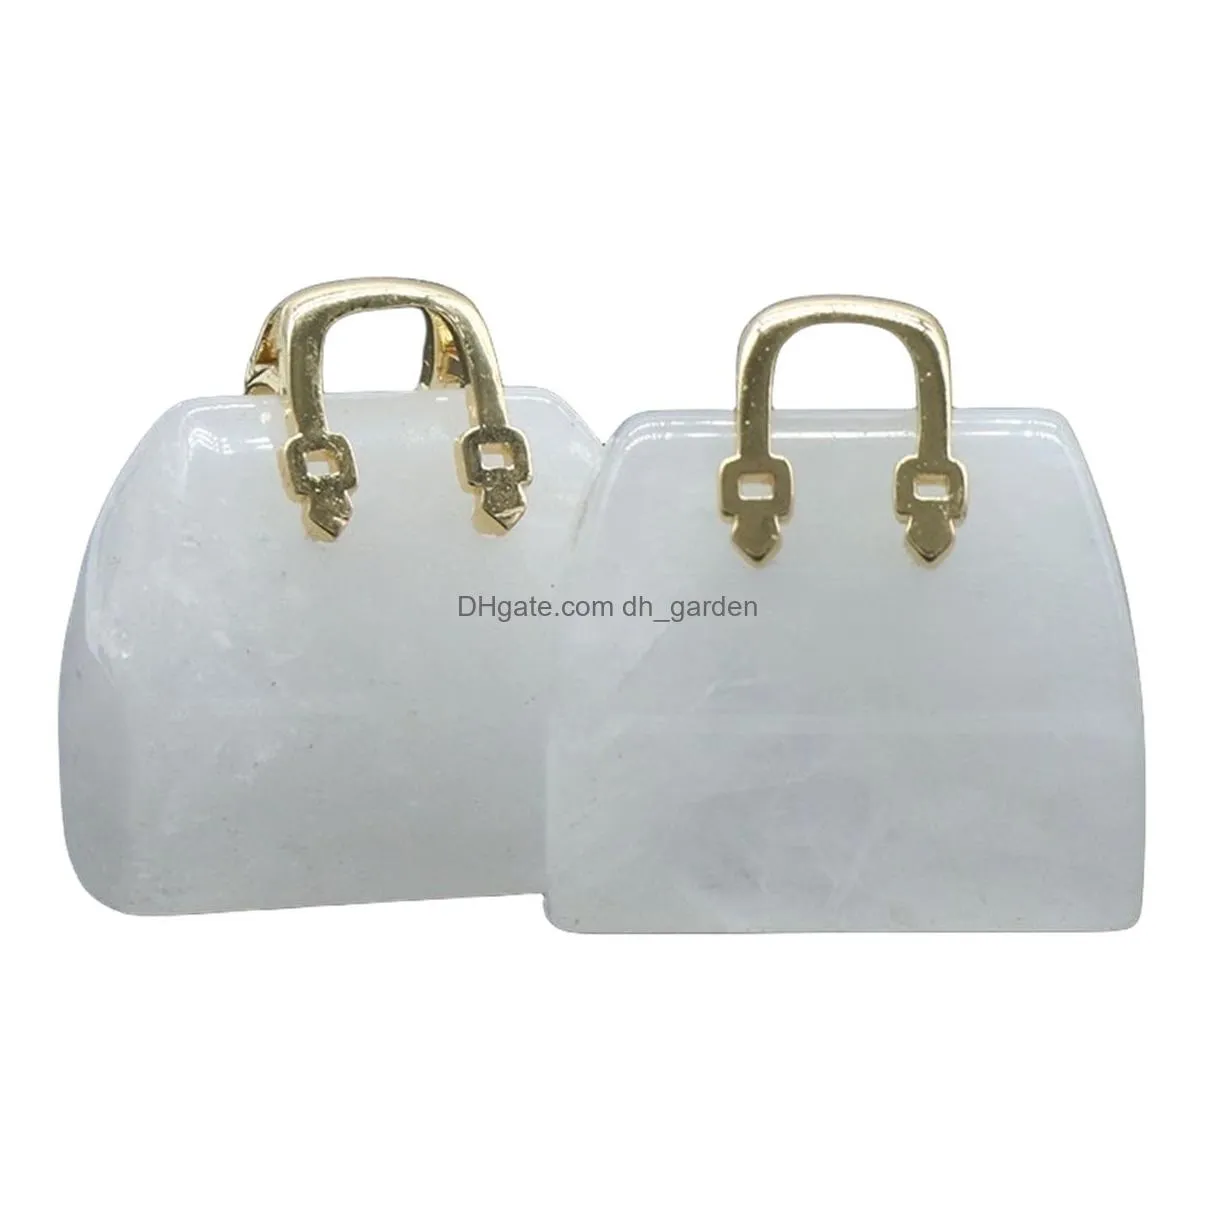 2pcs crystal bag decoration diy jewelry accessories handbag shape energy pendant handbag decoration natural crystal stone